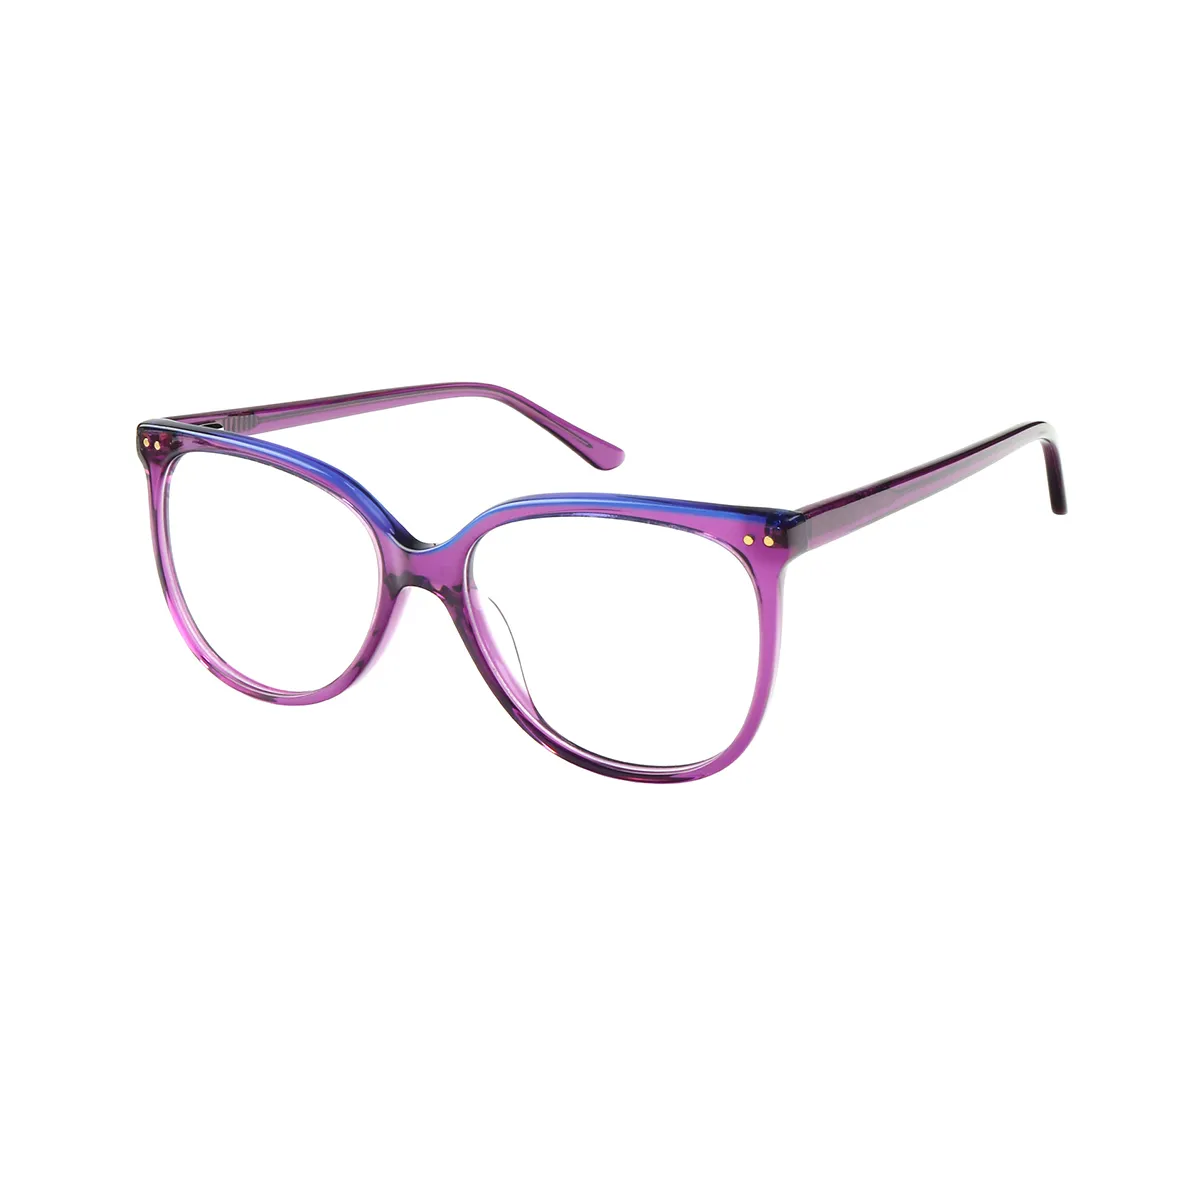 Tessie - Square  Glasses for Women